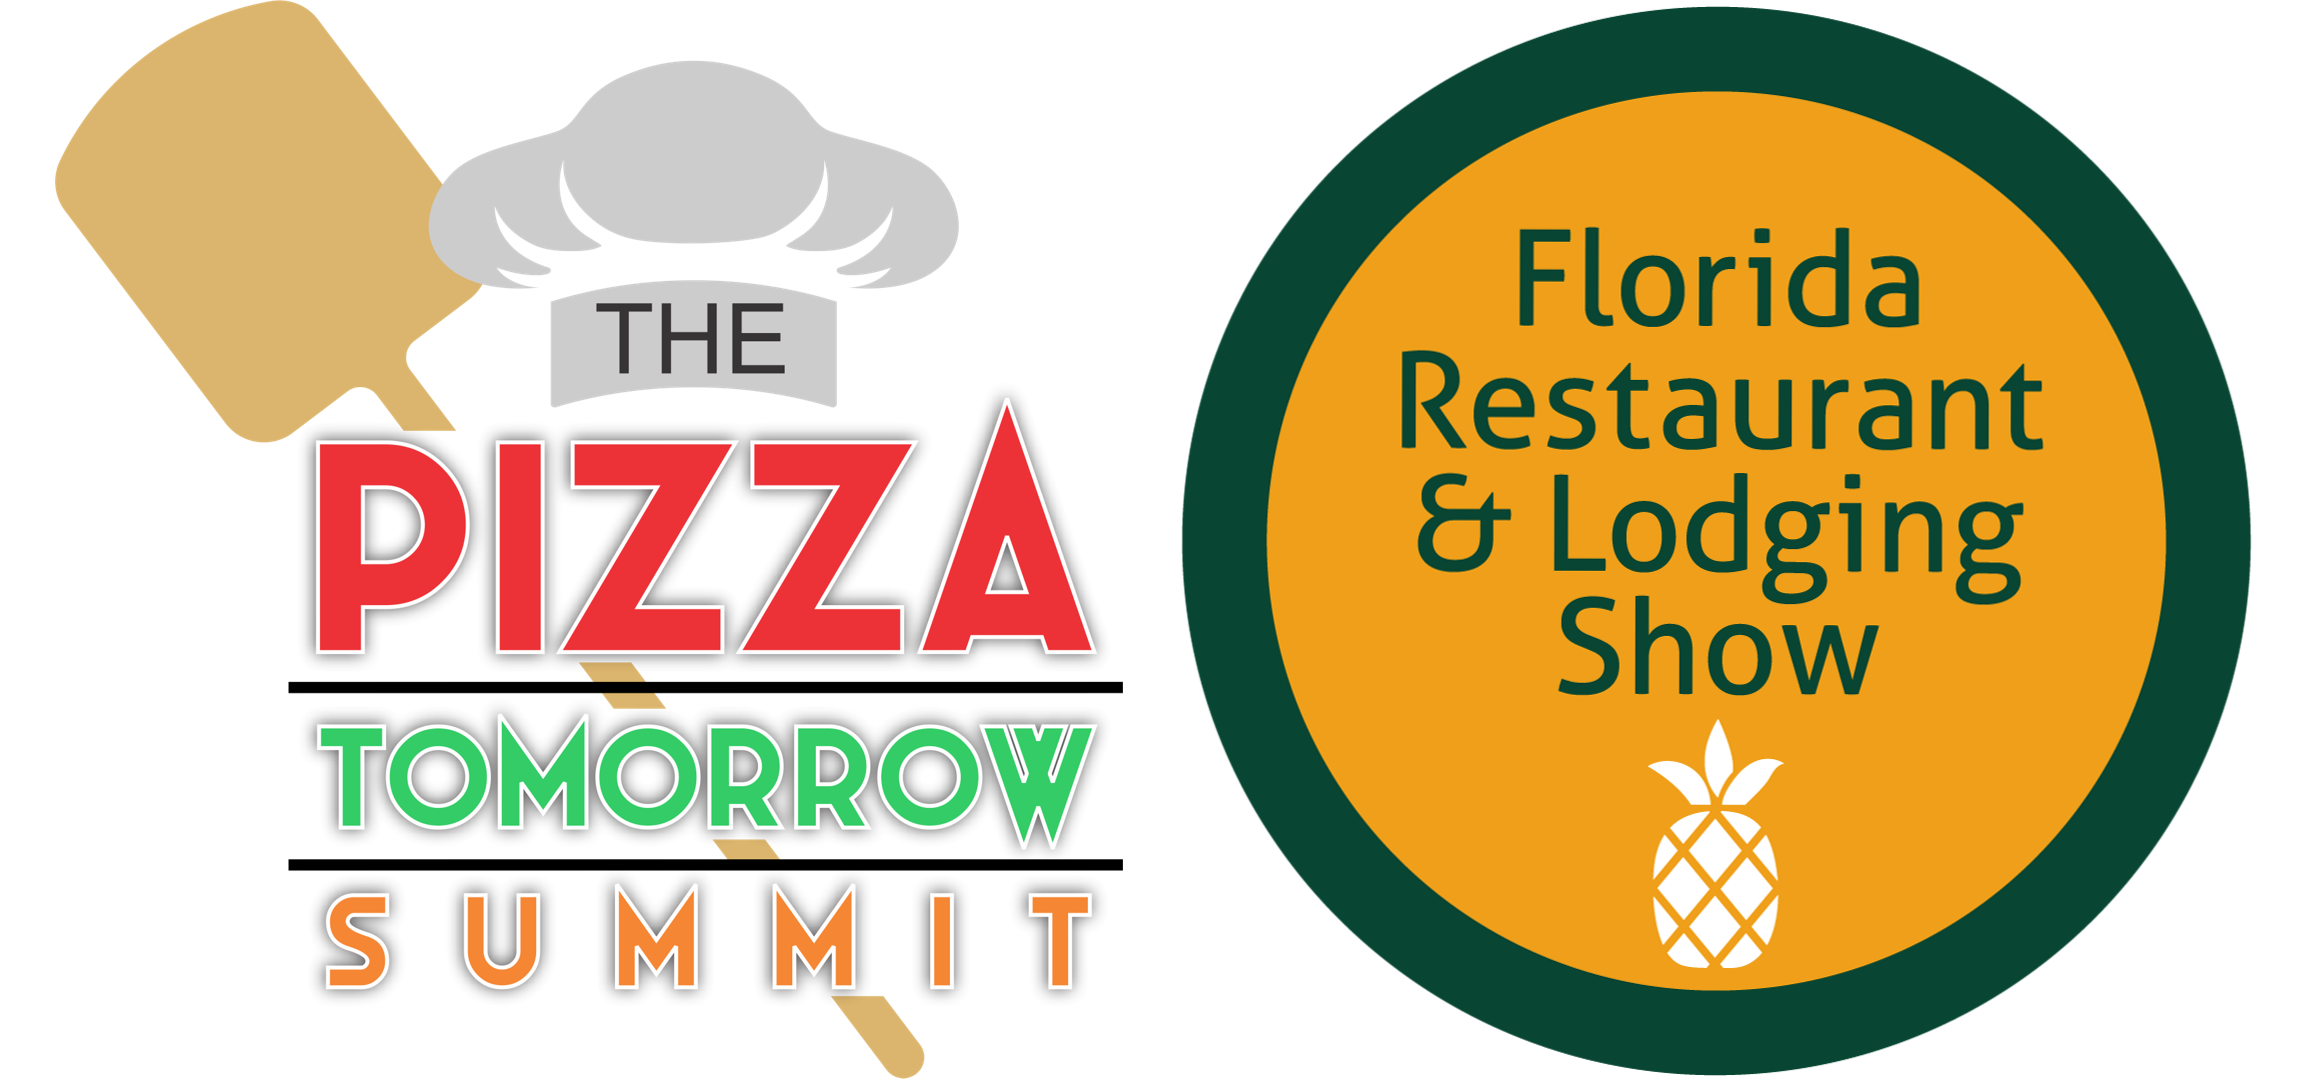 The Pizza Tomorrow Summit 2023